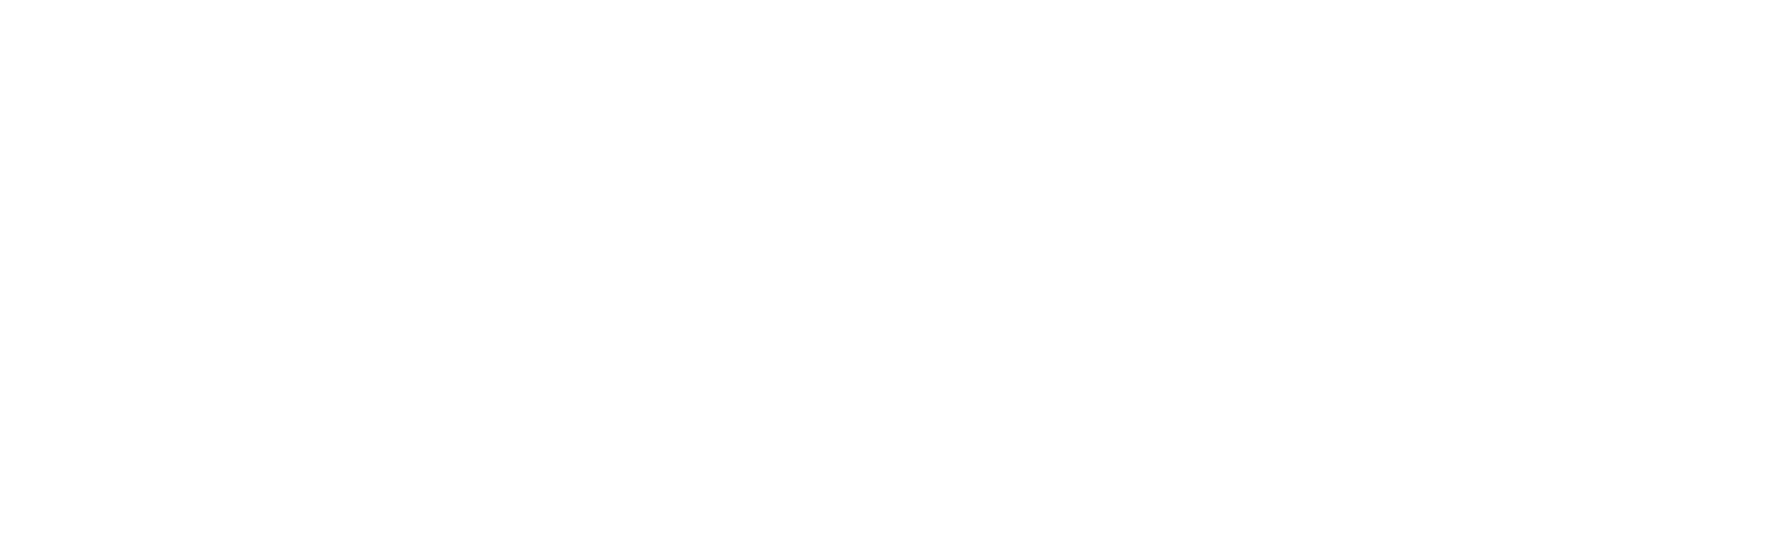 Hoodz Logo